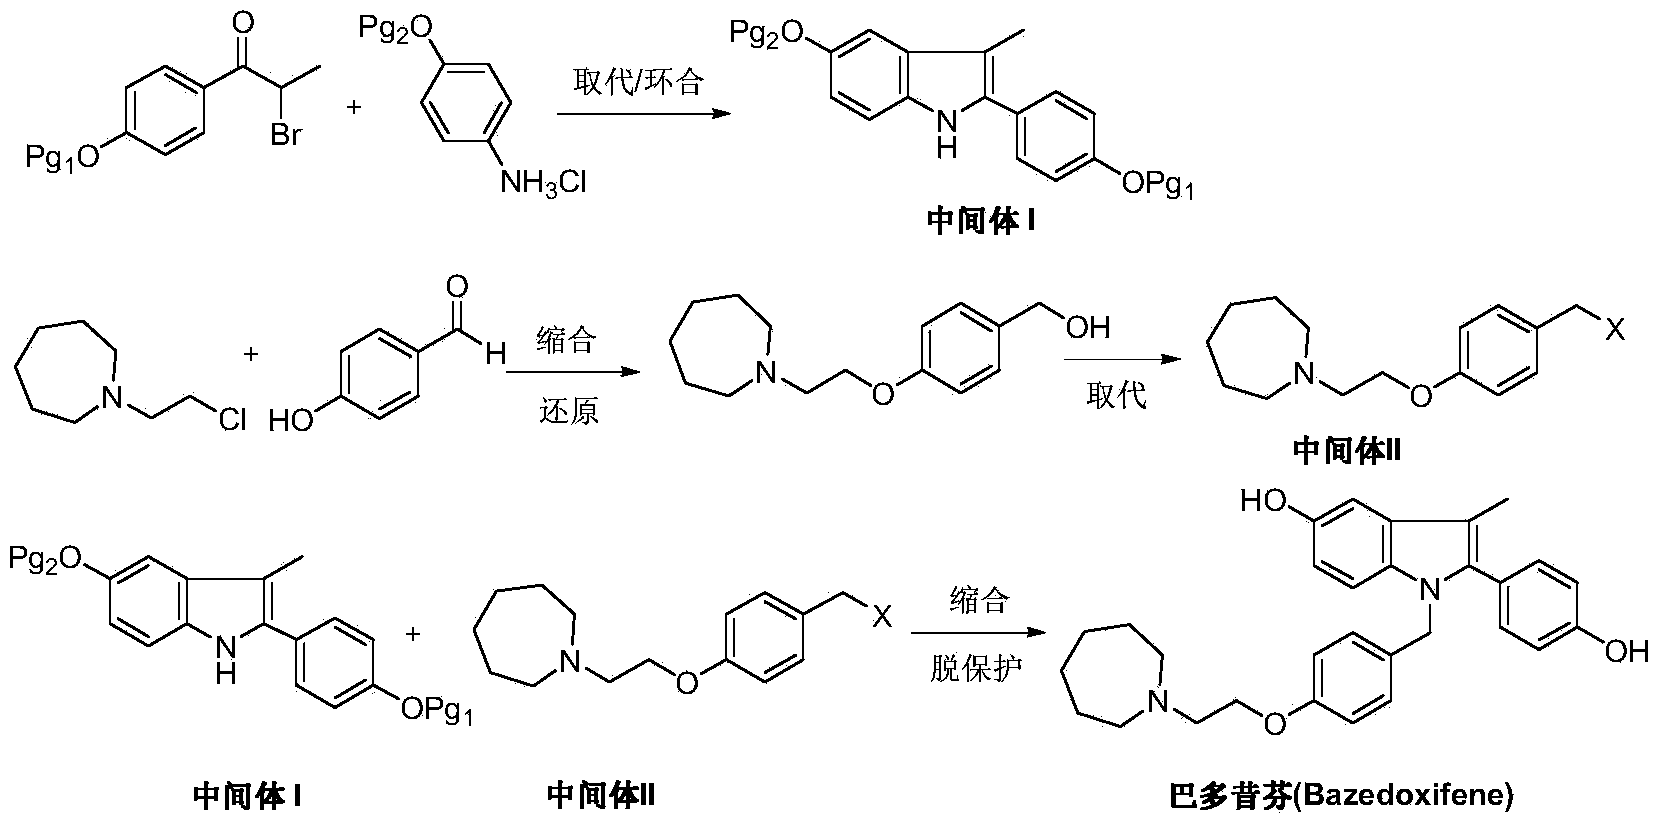 Bazedoxifene intermediate and preparation method thereof